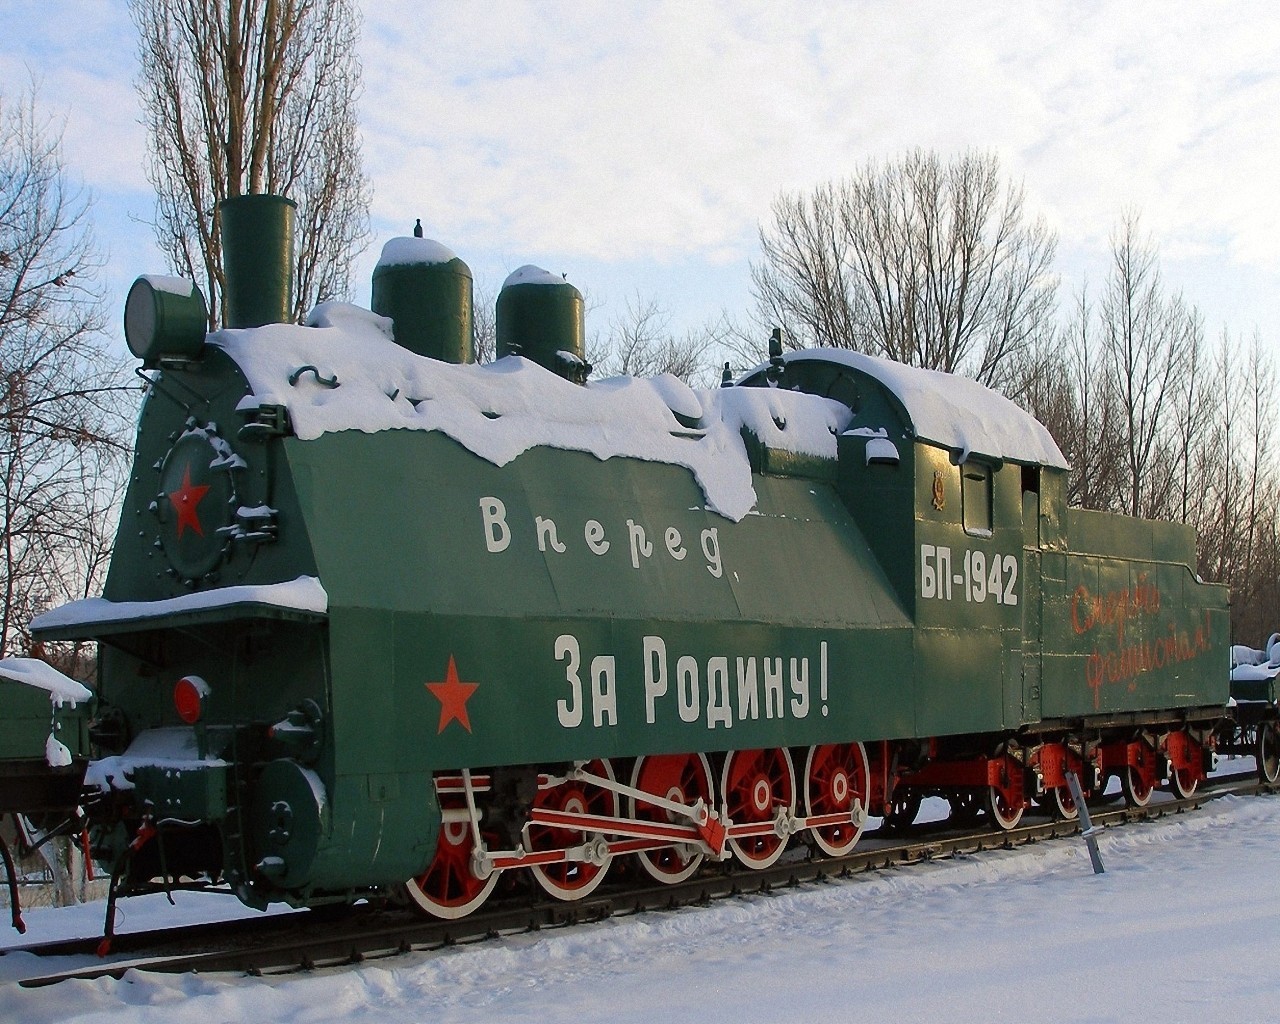 General 1280x1024 steam locomotive locomotive winter vehicle numbers outdoors